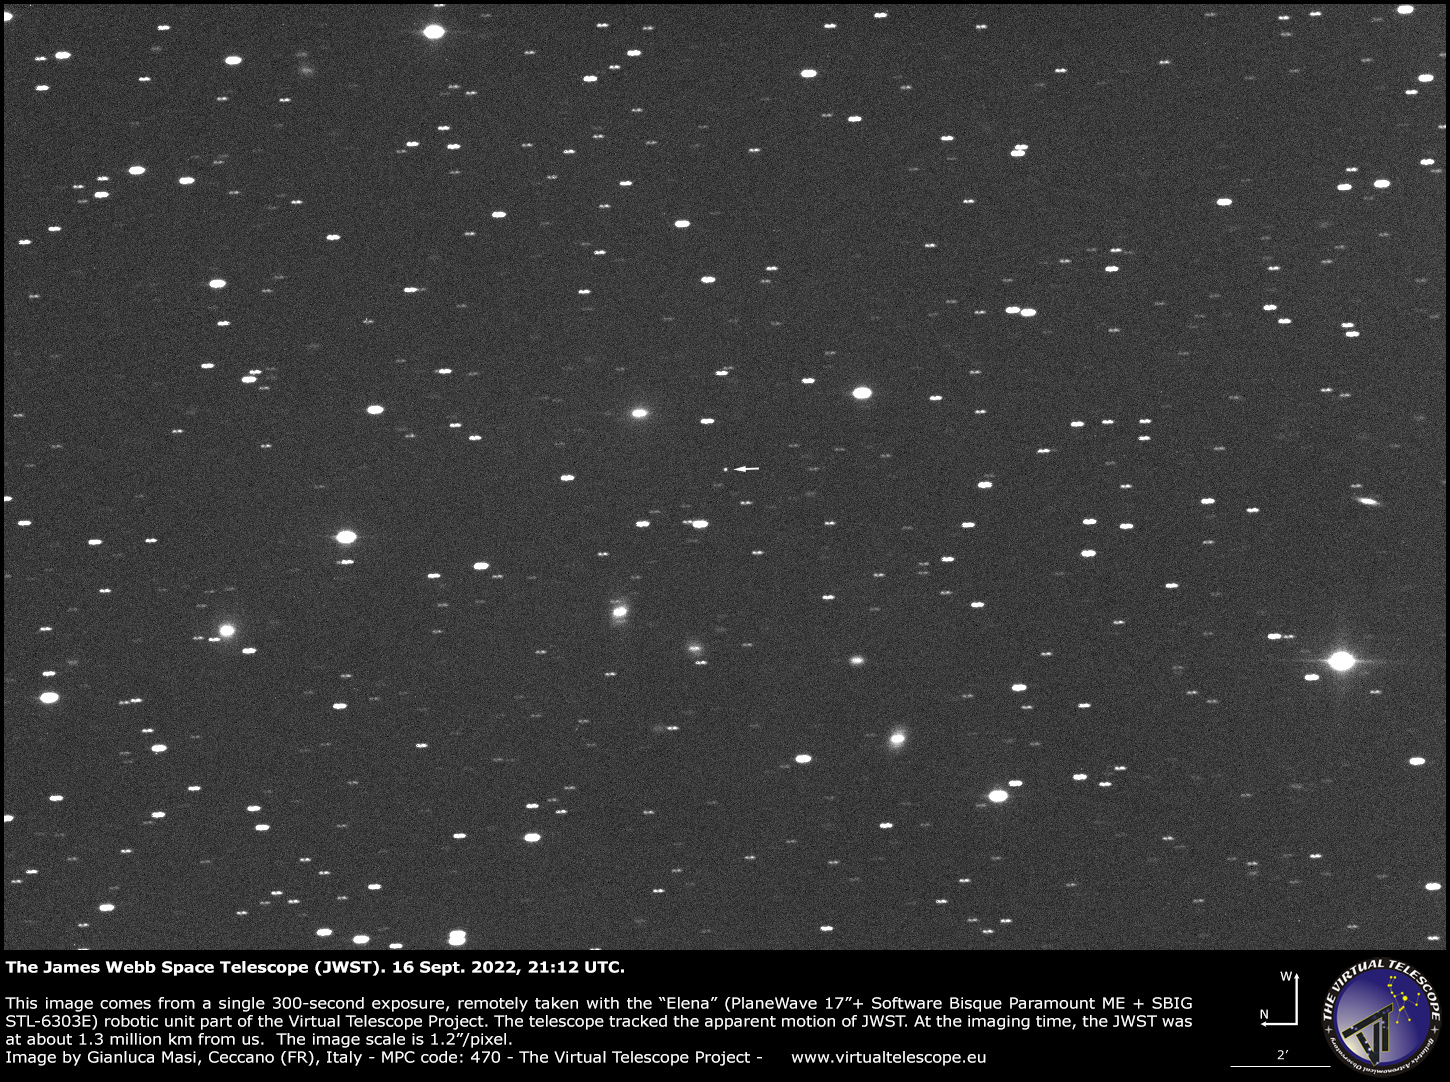 The James Webb Telescope, imaged from Earth. - 16 Sept. 2022.